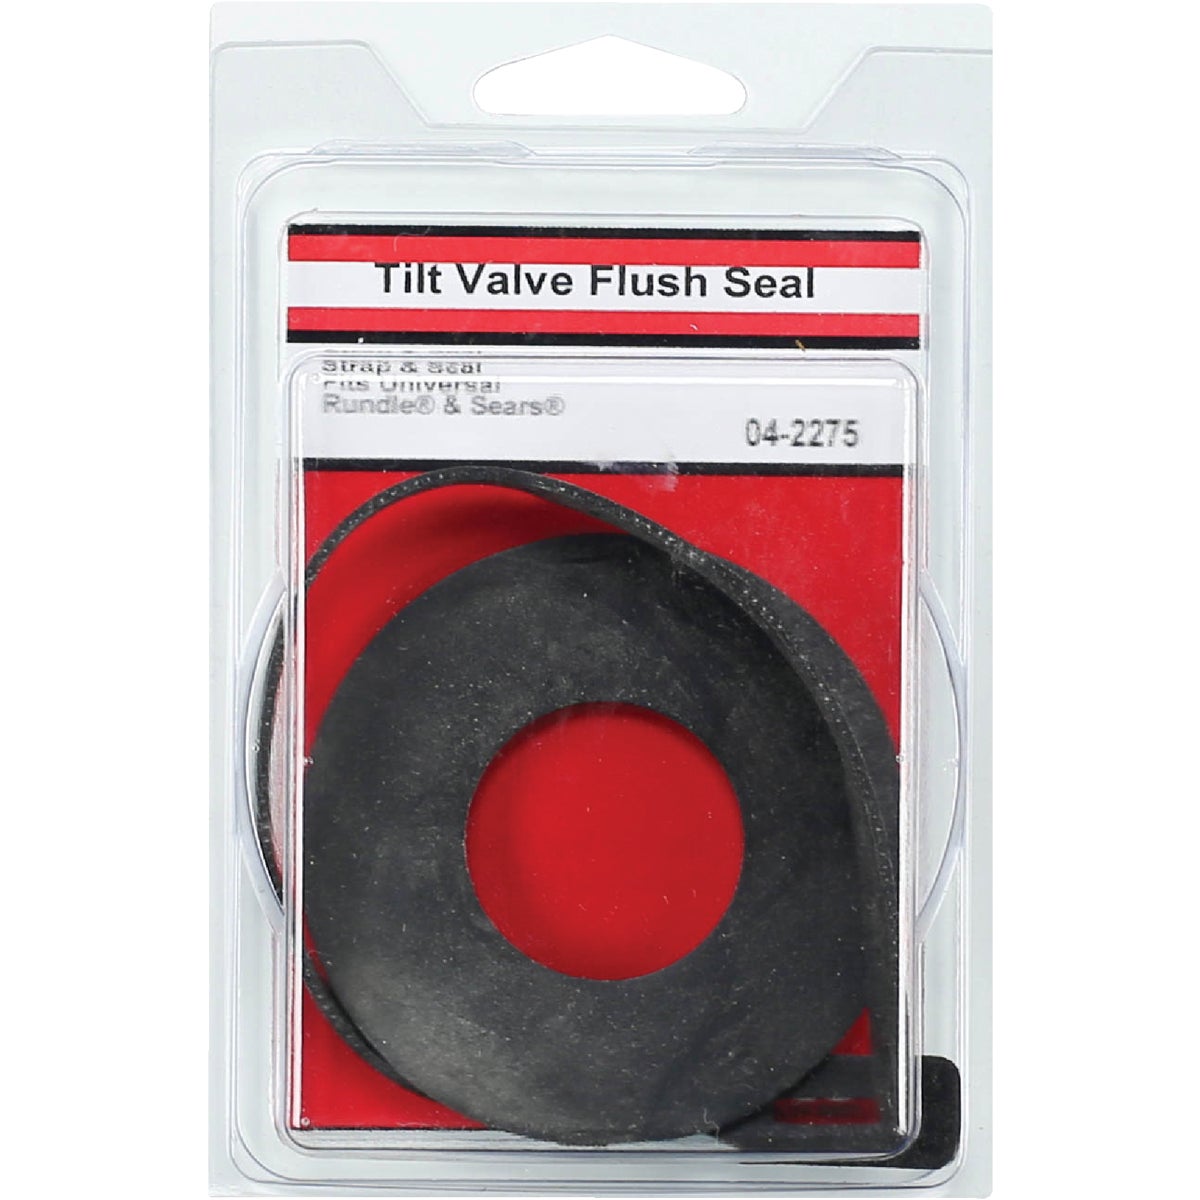 Lasco 04-2275 Lasco Strap & Disc Flush Valve Repair Kit for Universal Rundle and Sears 04-2275